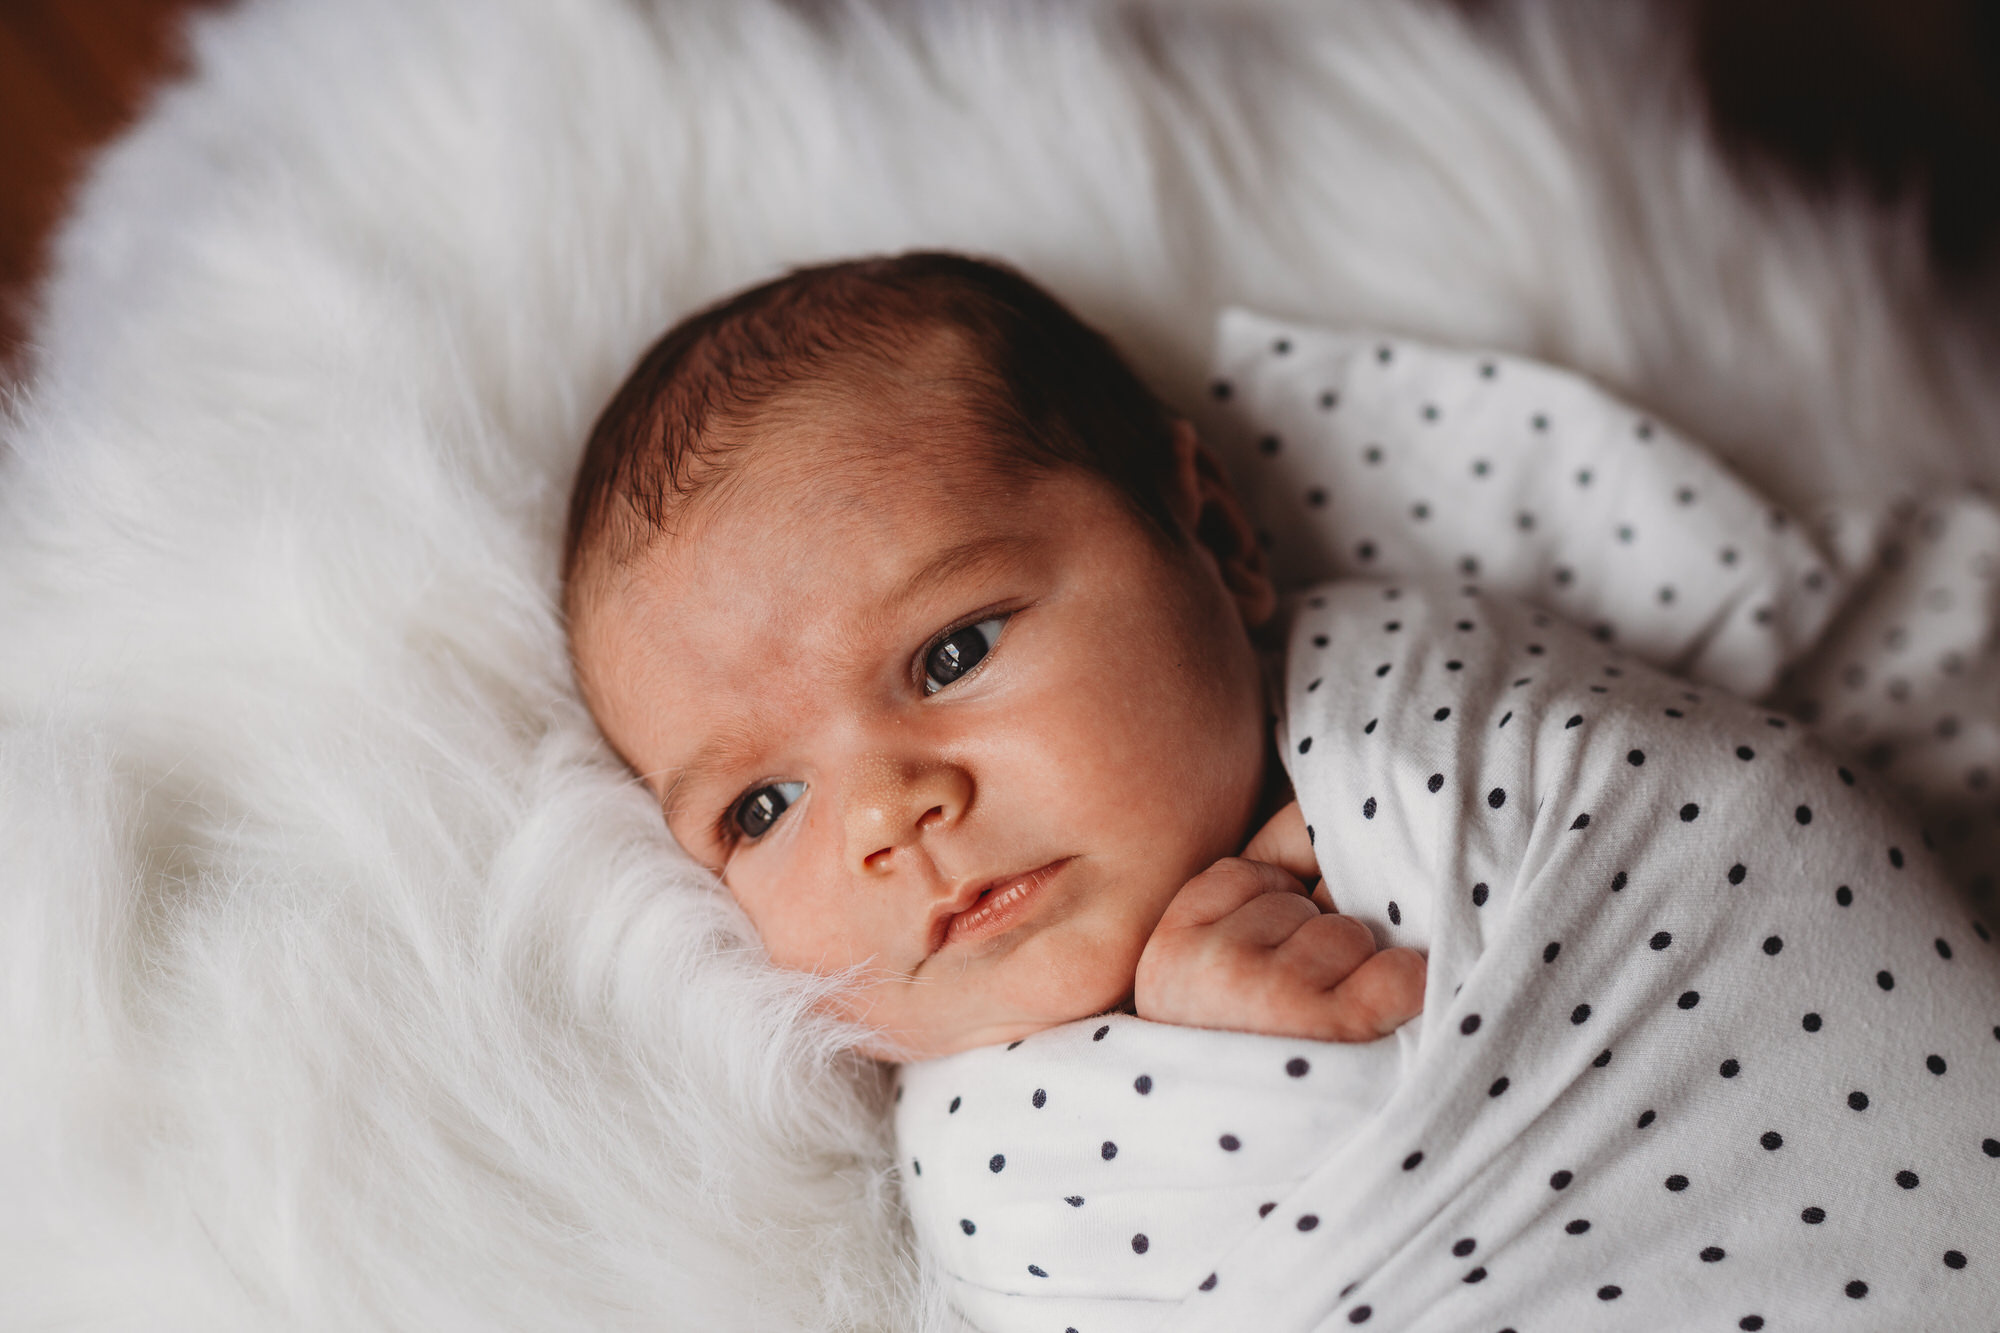 Tillsonburg newborn Photographer - newborn portrait on soft white